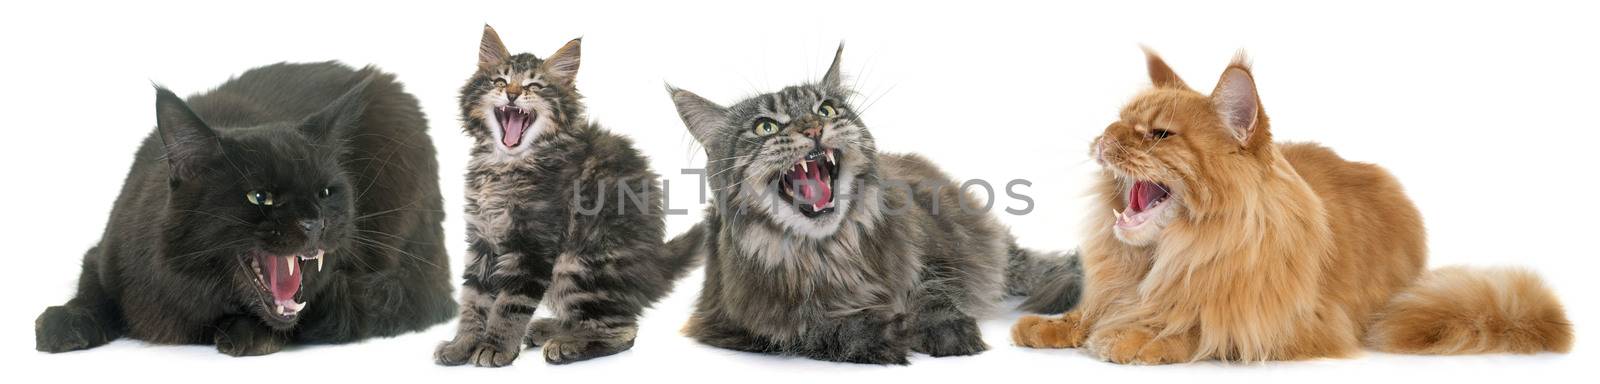 aggressive cats by cynoclub